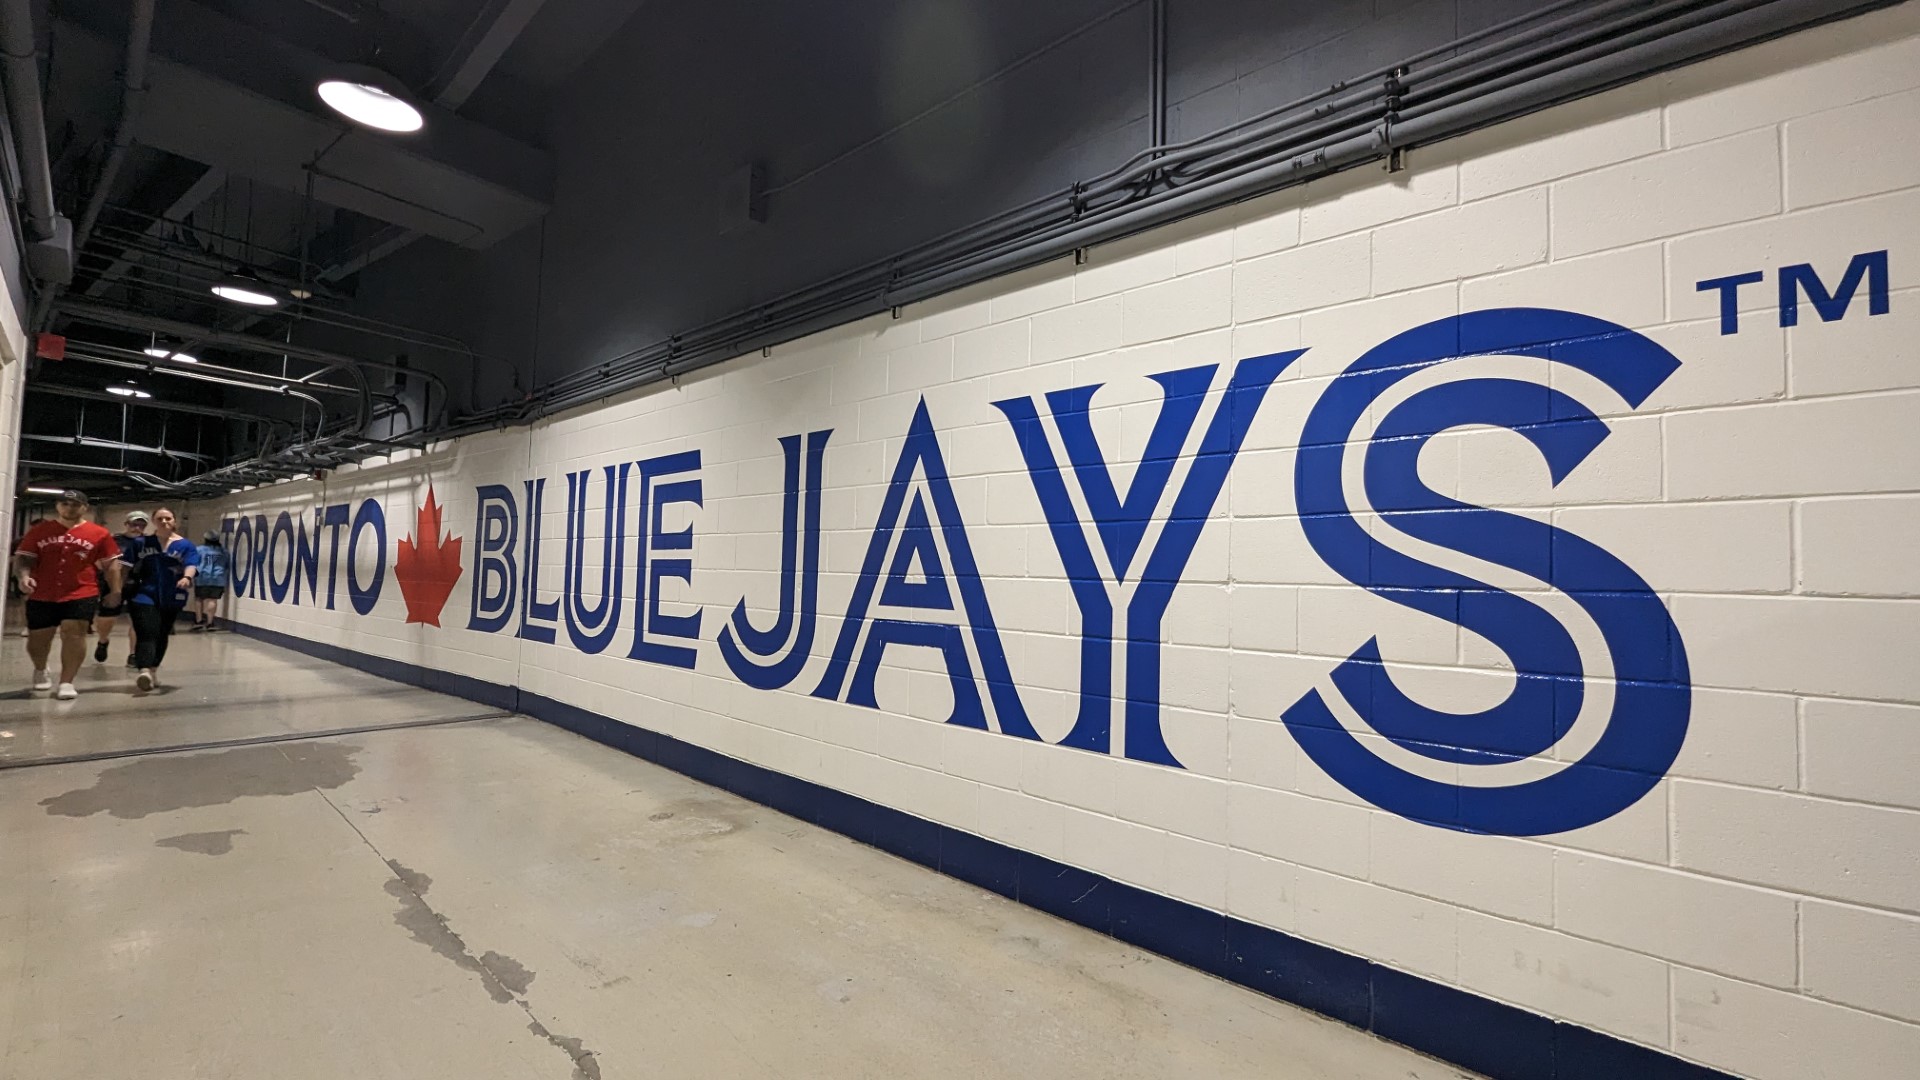 37 Toronto Blue Jays Style ideas  toronto blue jays, blue jays, style